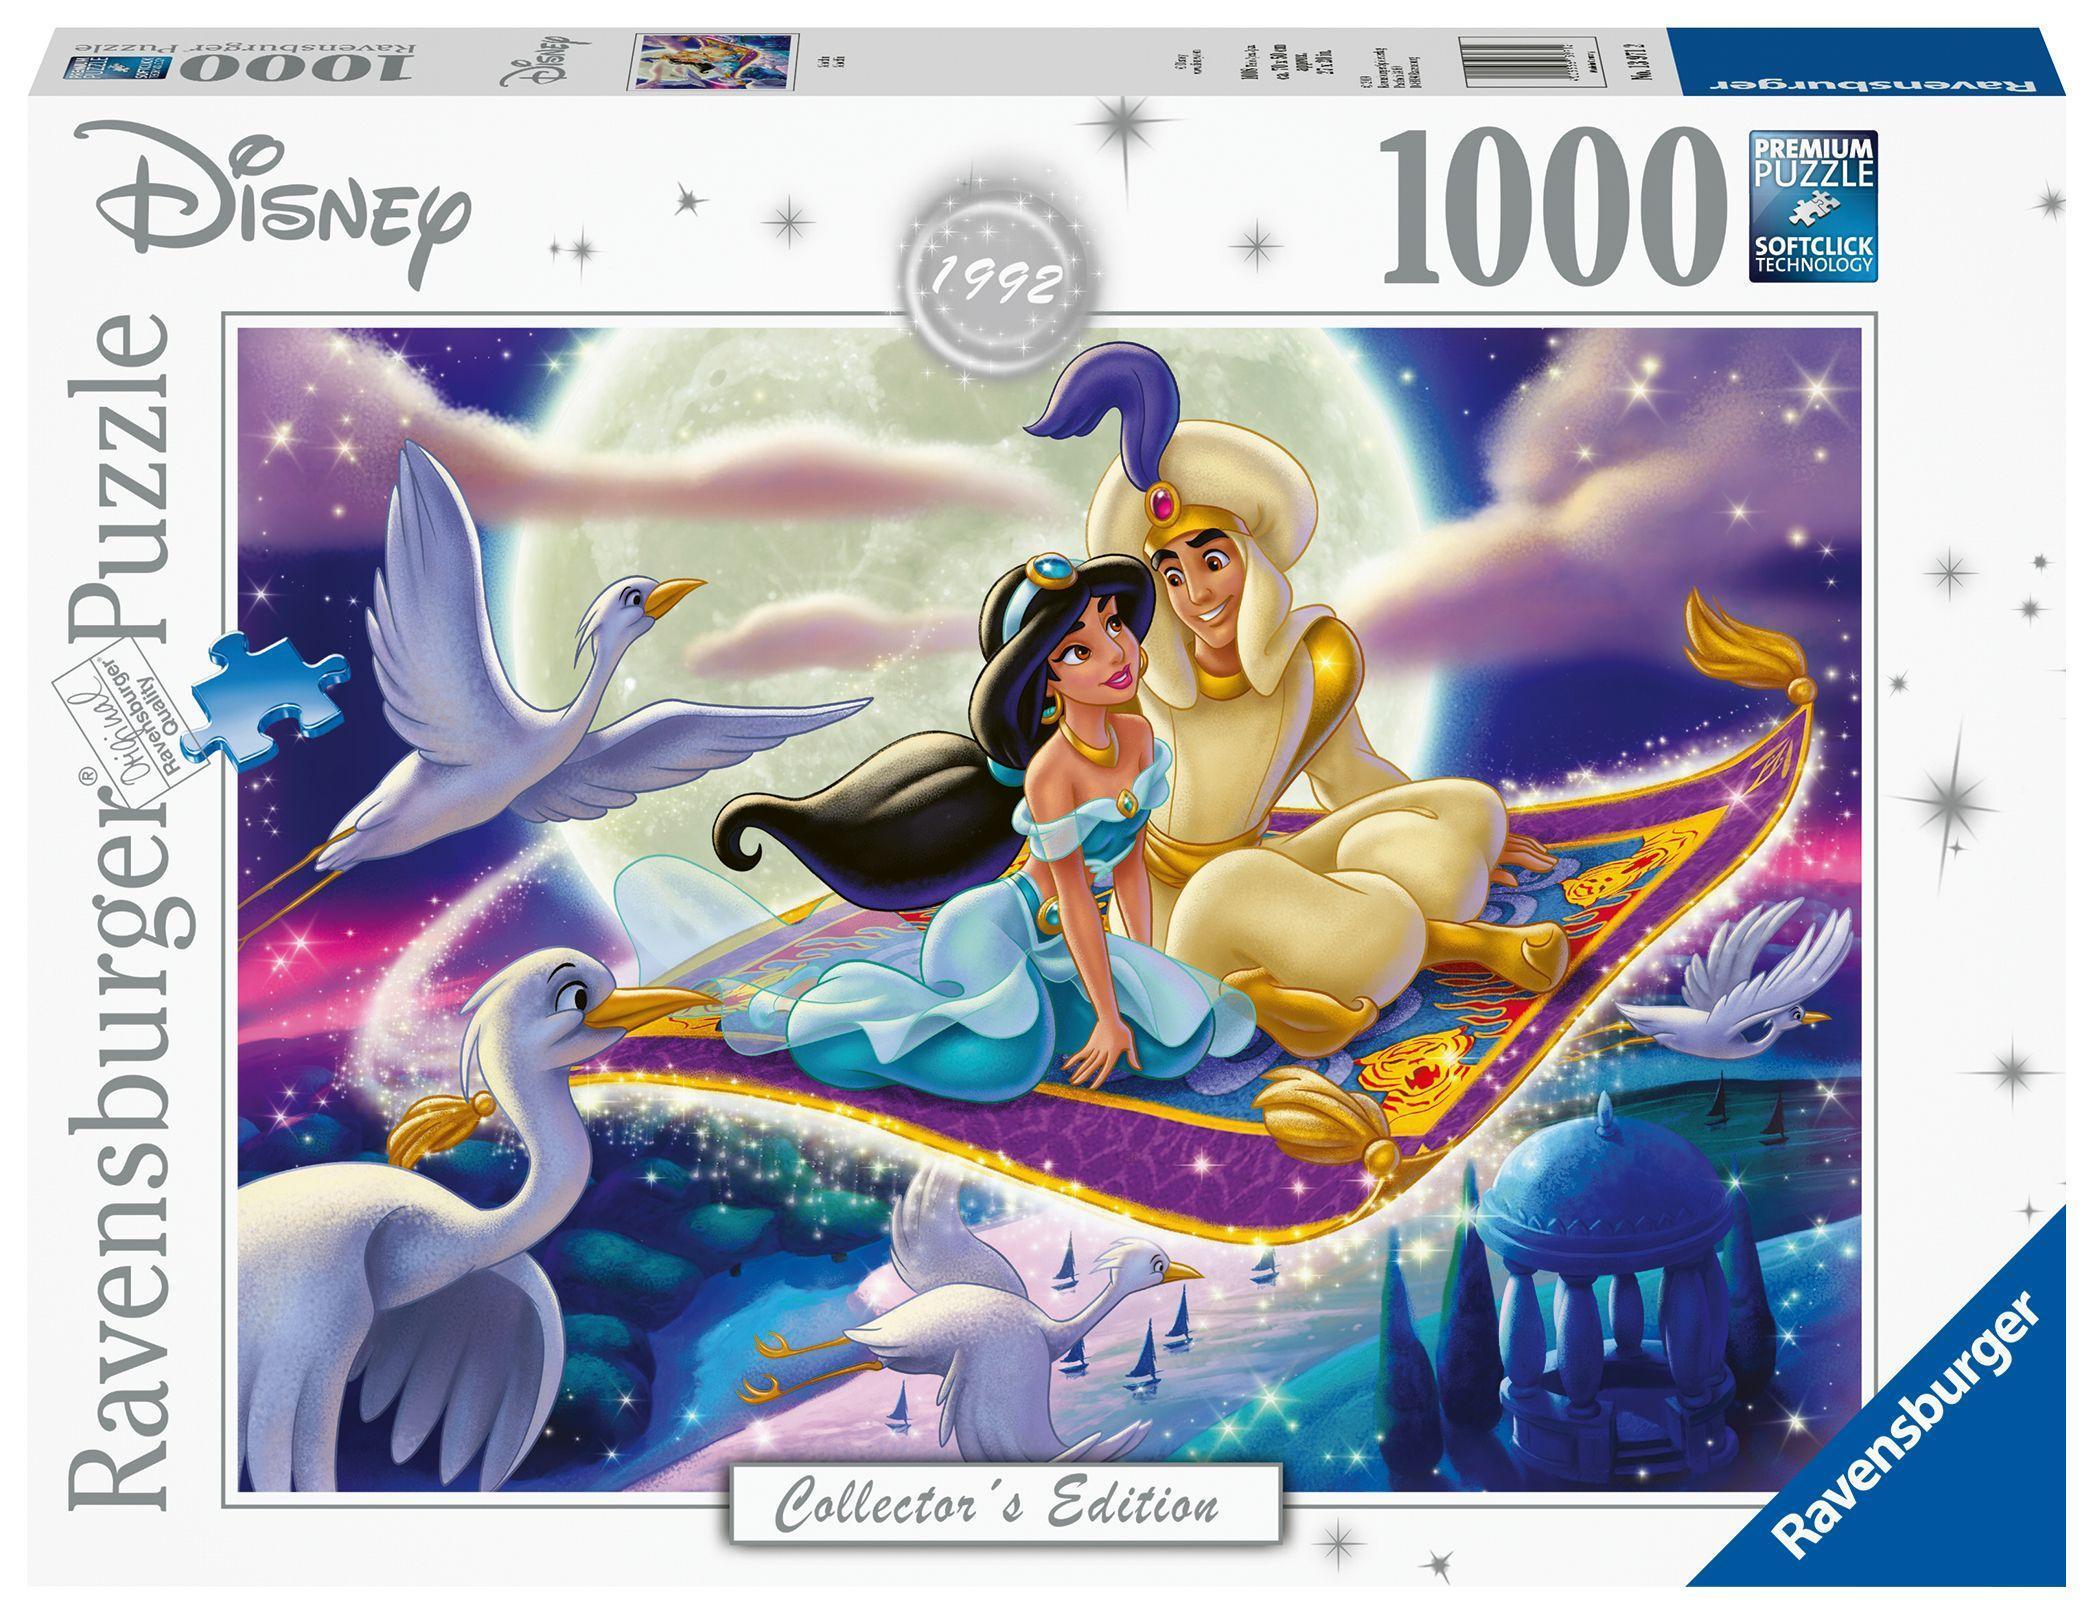 Disney Dumbo Erwachsenenpuzzle 1000 Teile 70 x 50 cm RAVENSBURGER Premiumpuzzle 